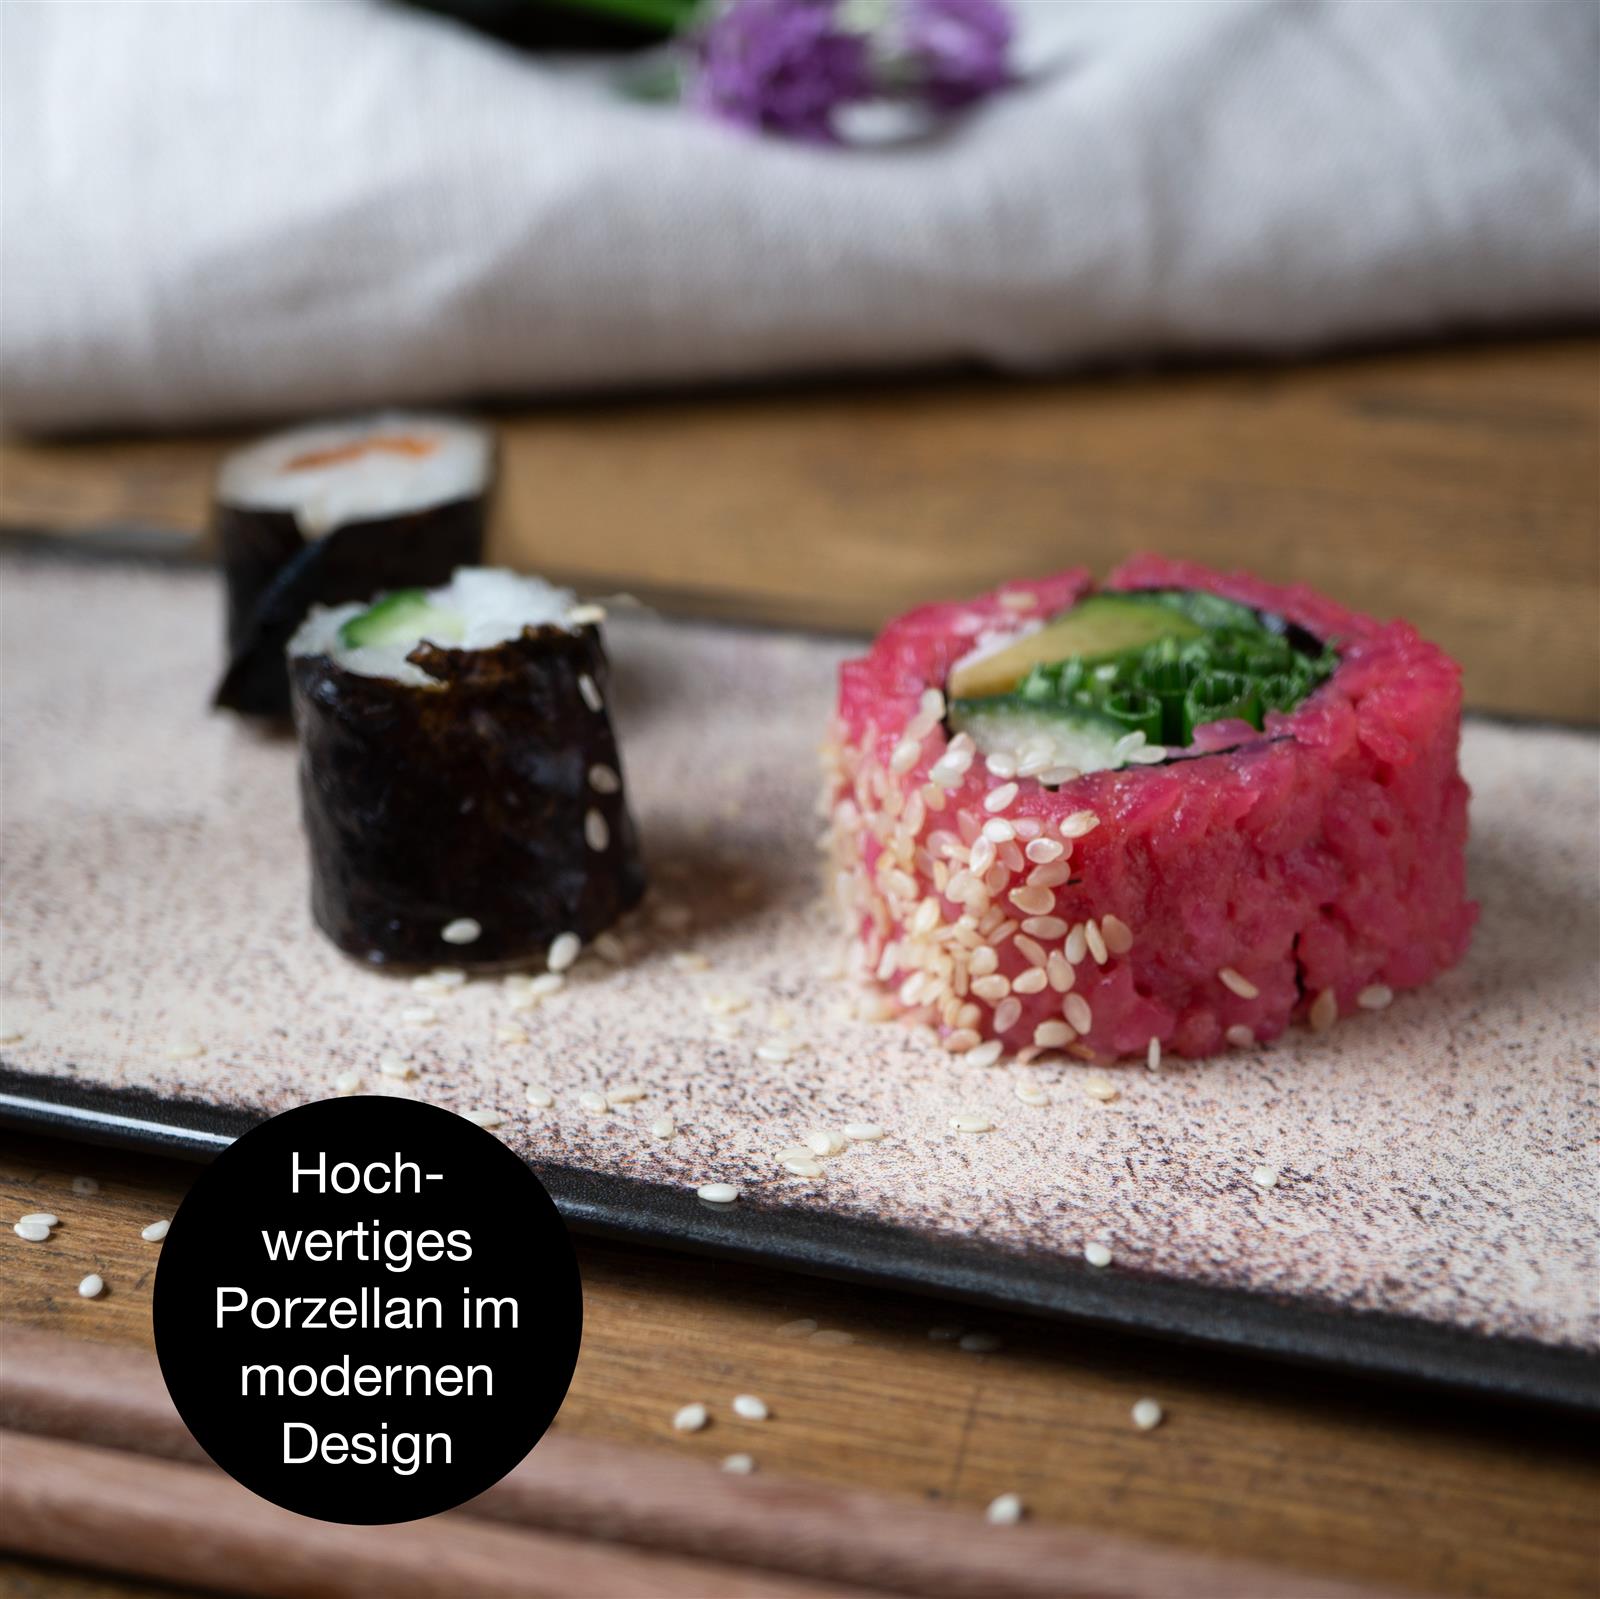 VIDA 10tlg Sushi Teller beige Asia Geschirr Set